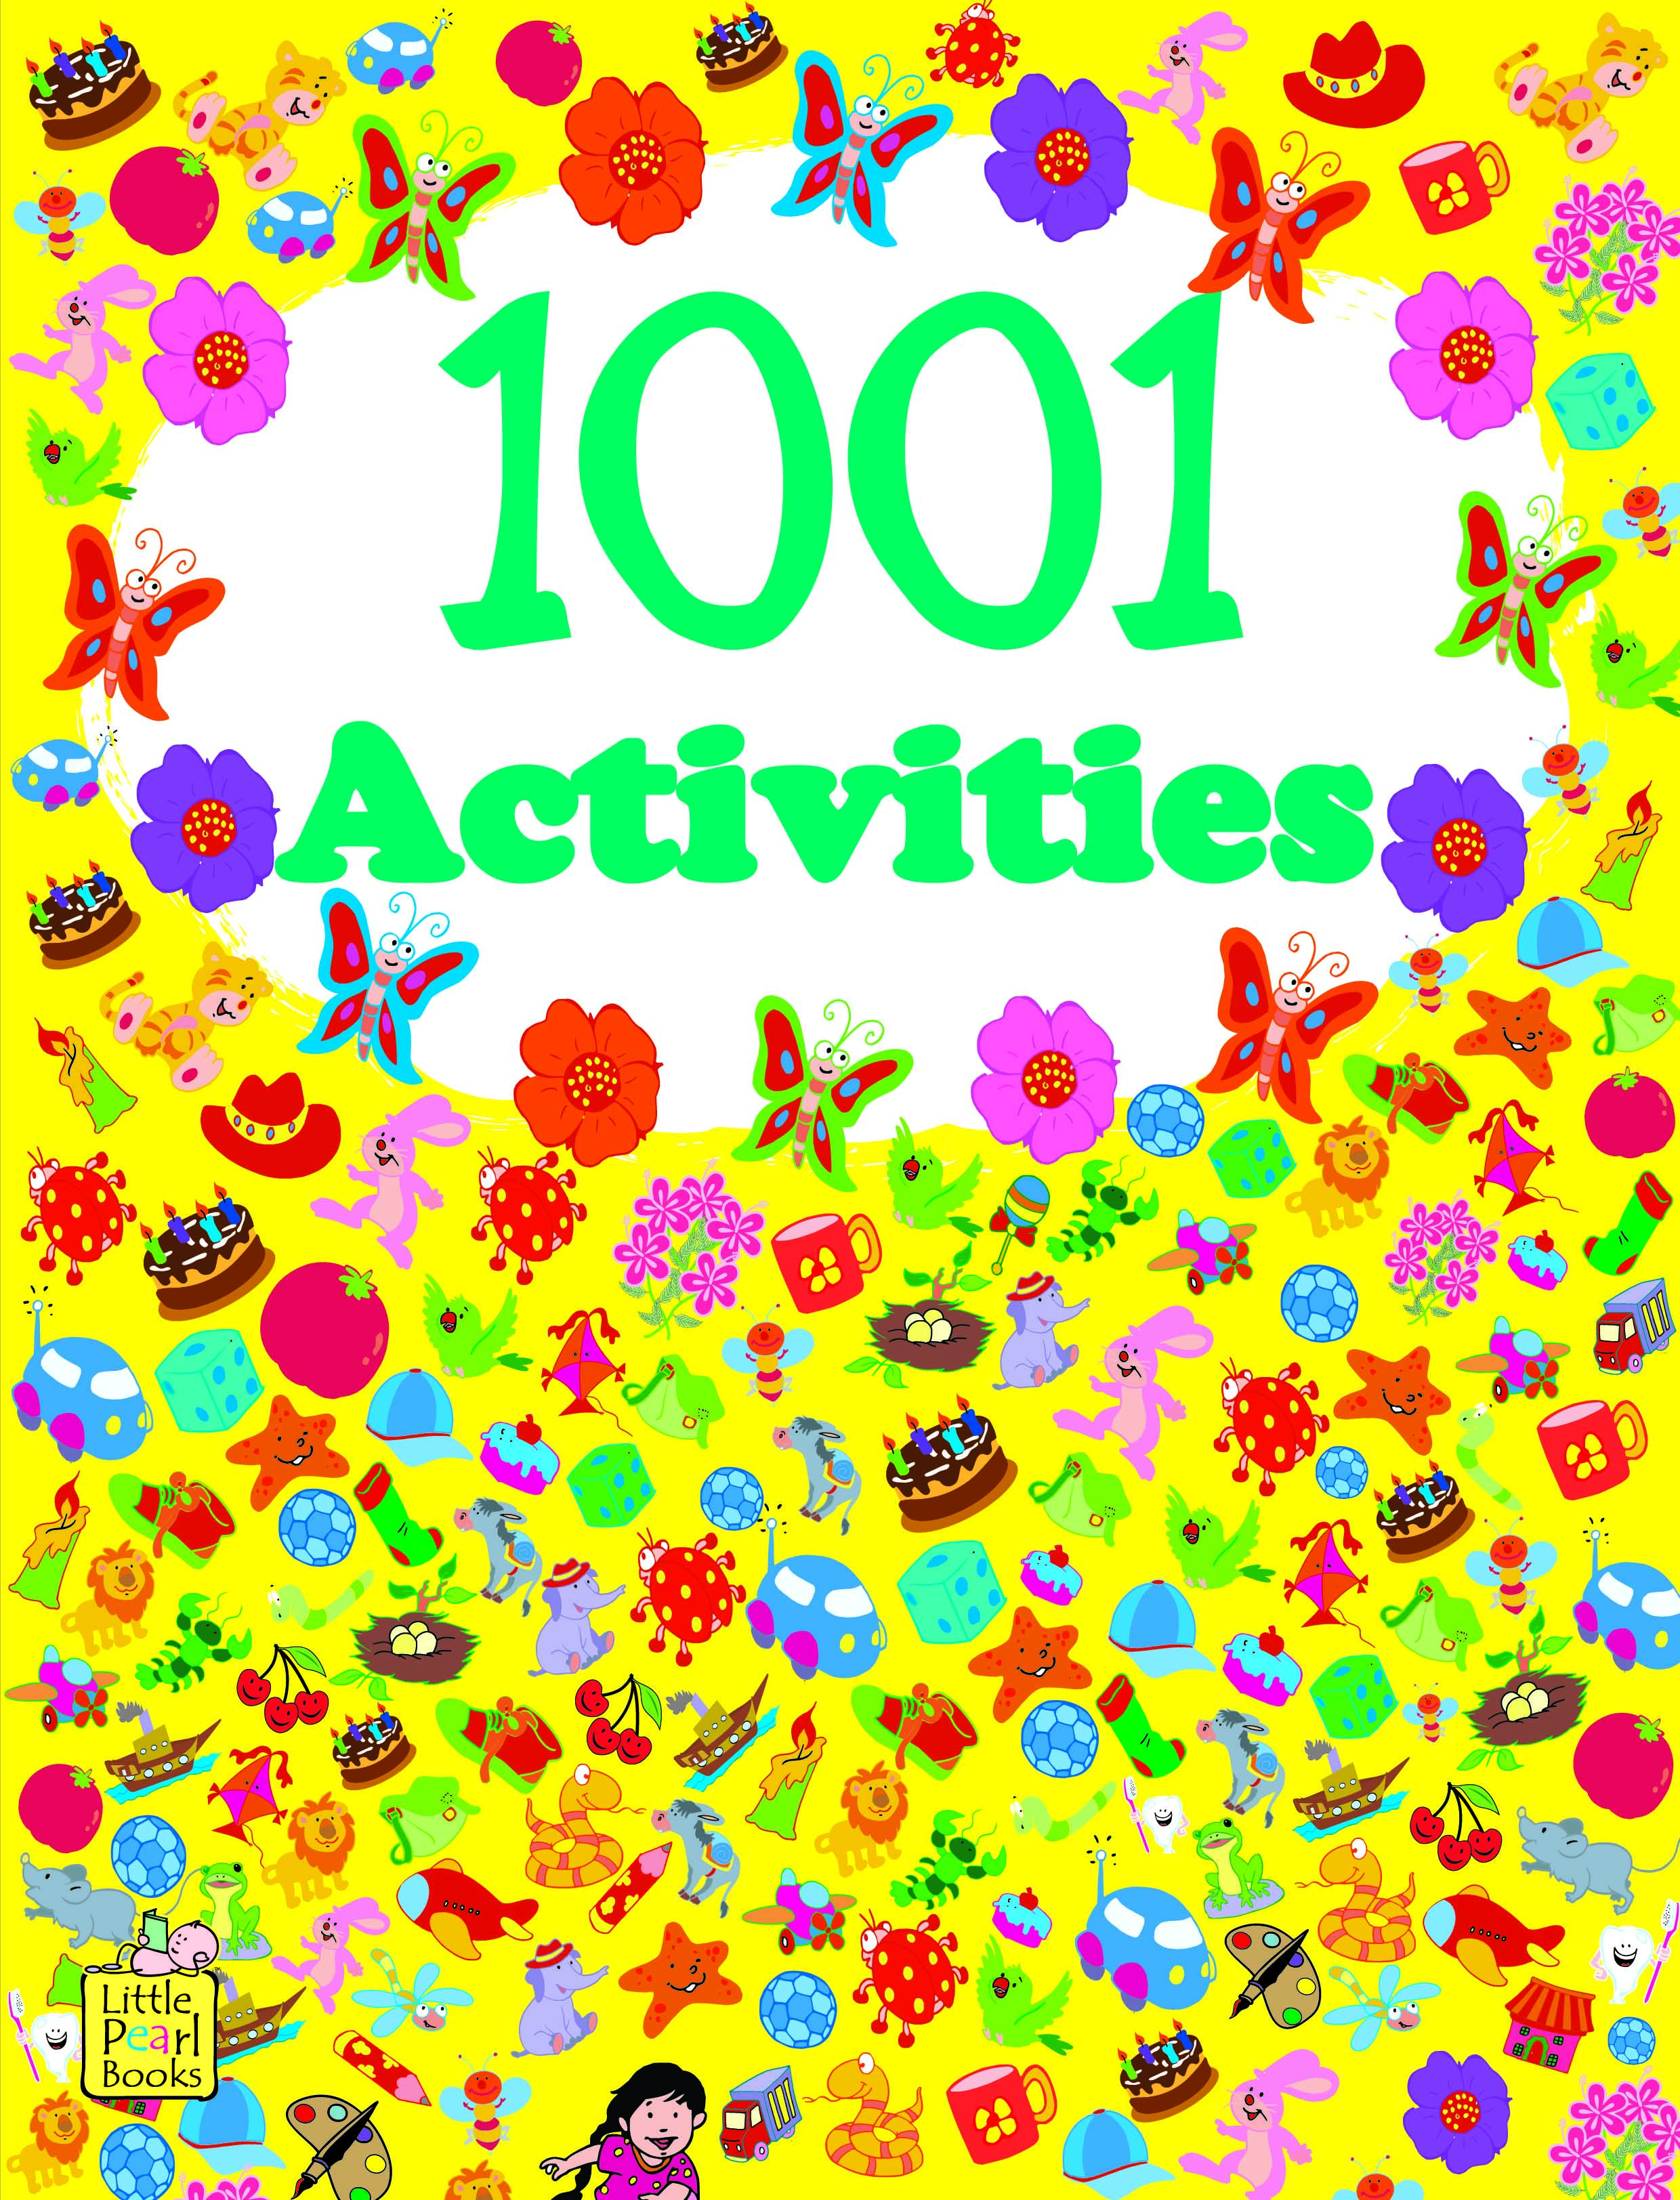 1001 activities book pdf free download